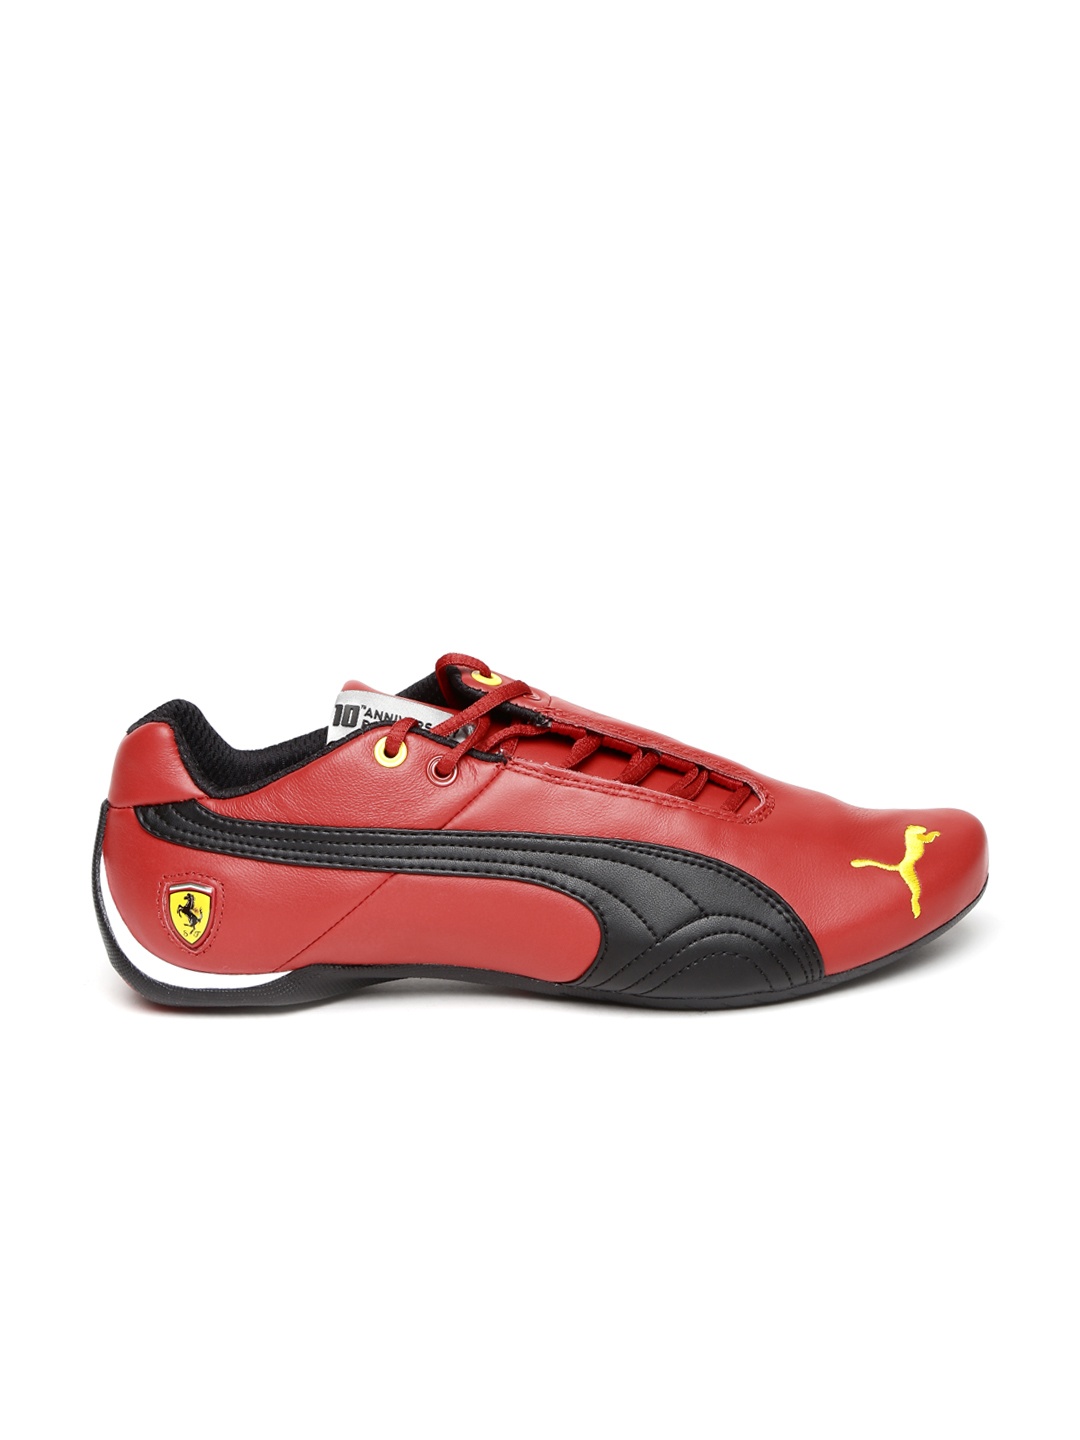 Myntra PUMA Unisex Red Future Cat Ferrari Sneakers 1089322 | Buy Myntra ...